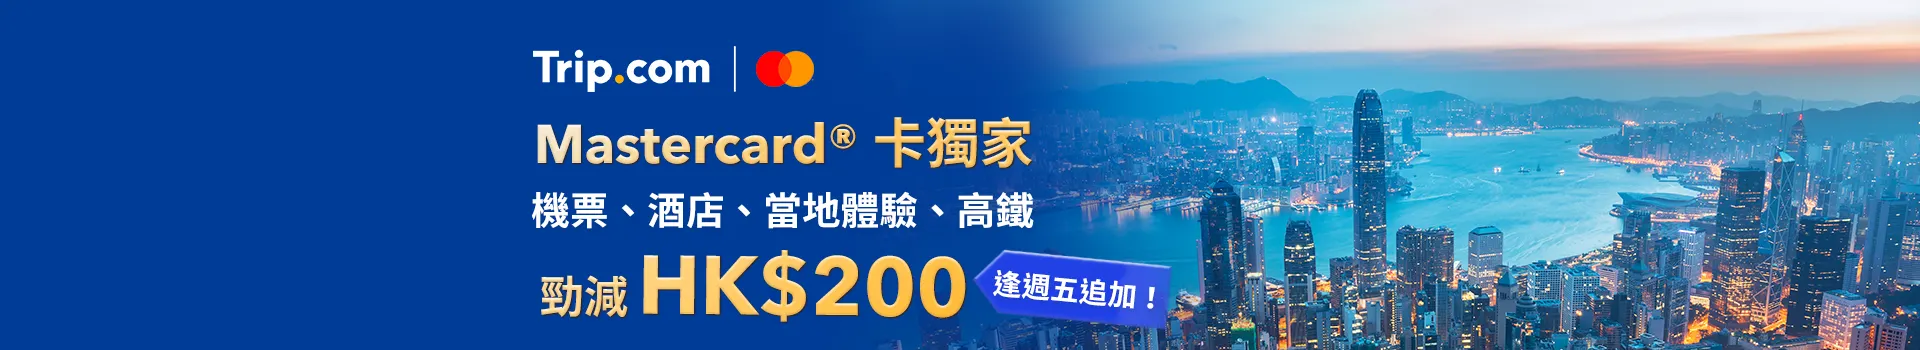 Trip.com信用卡優惠Mastercard HK